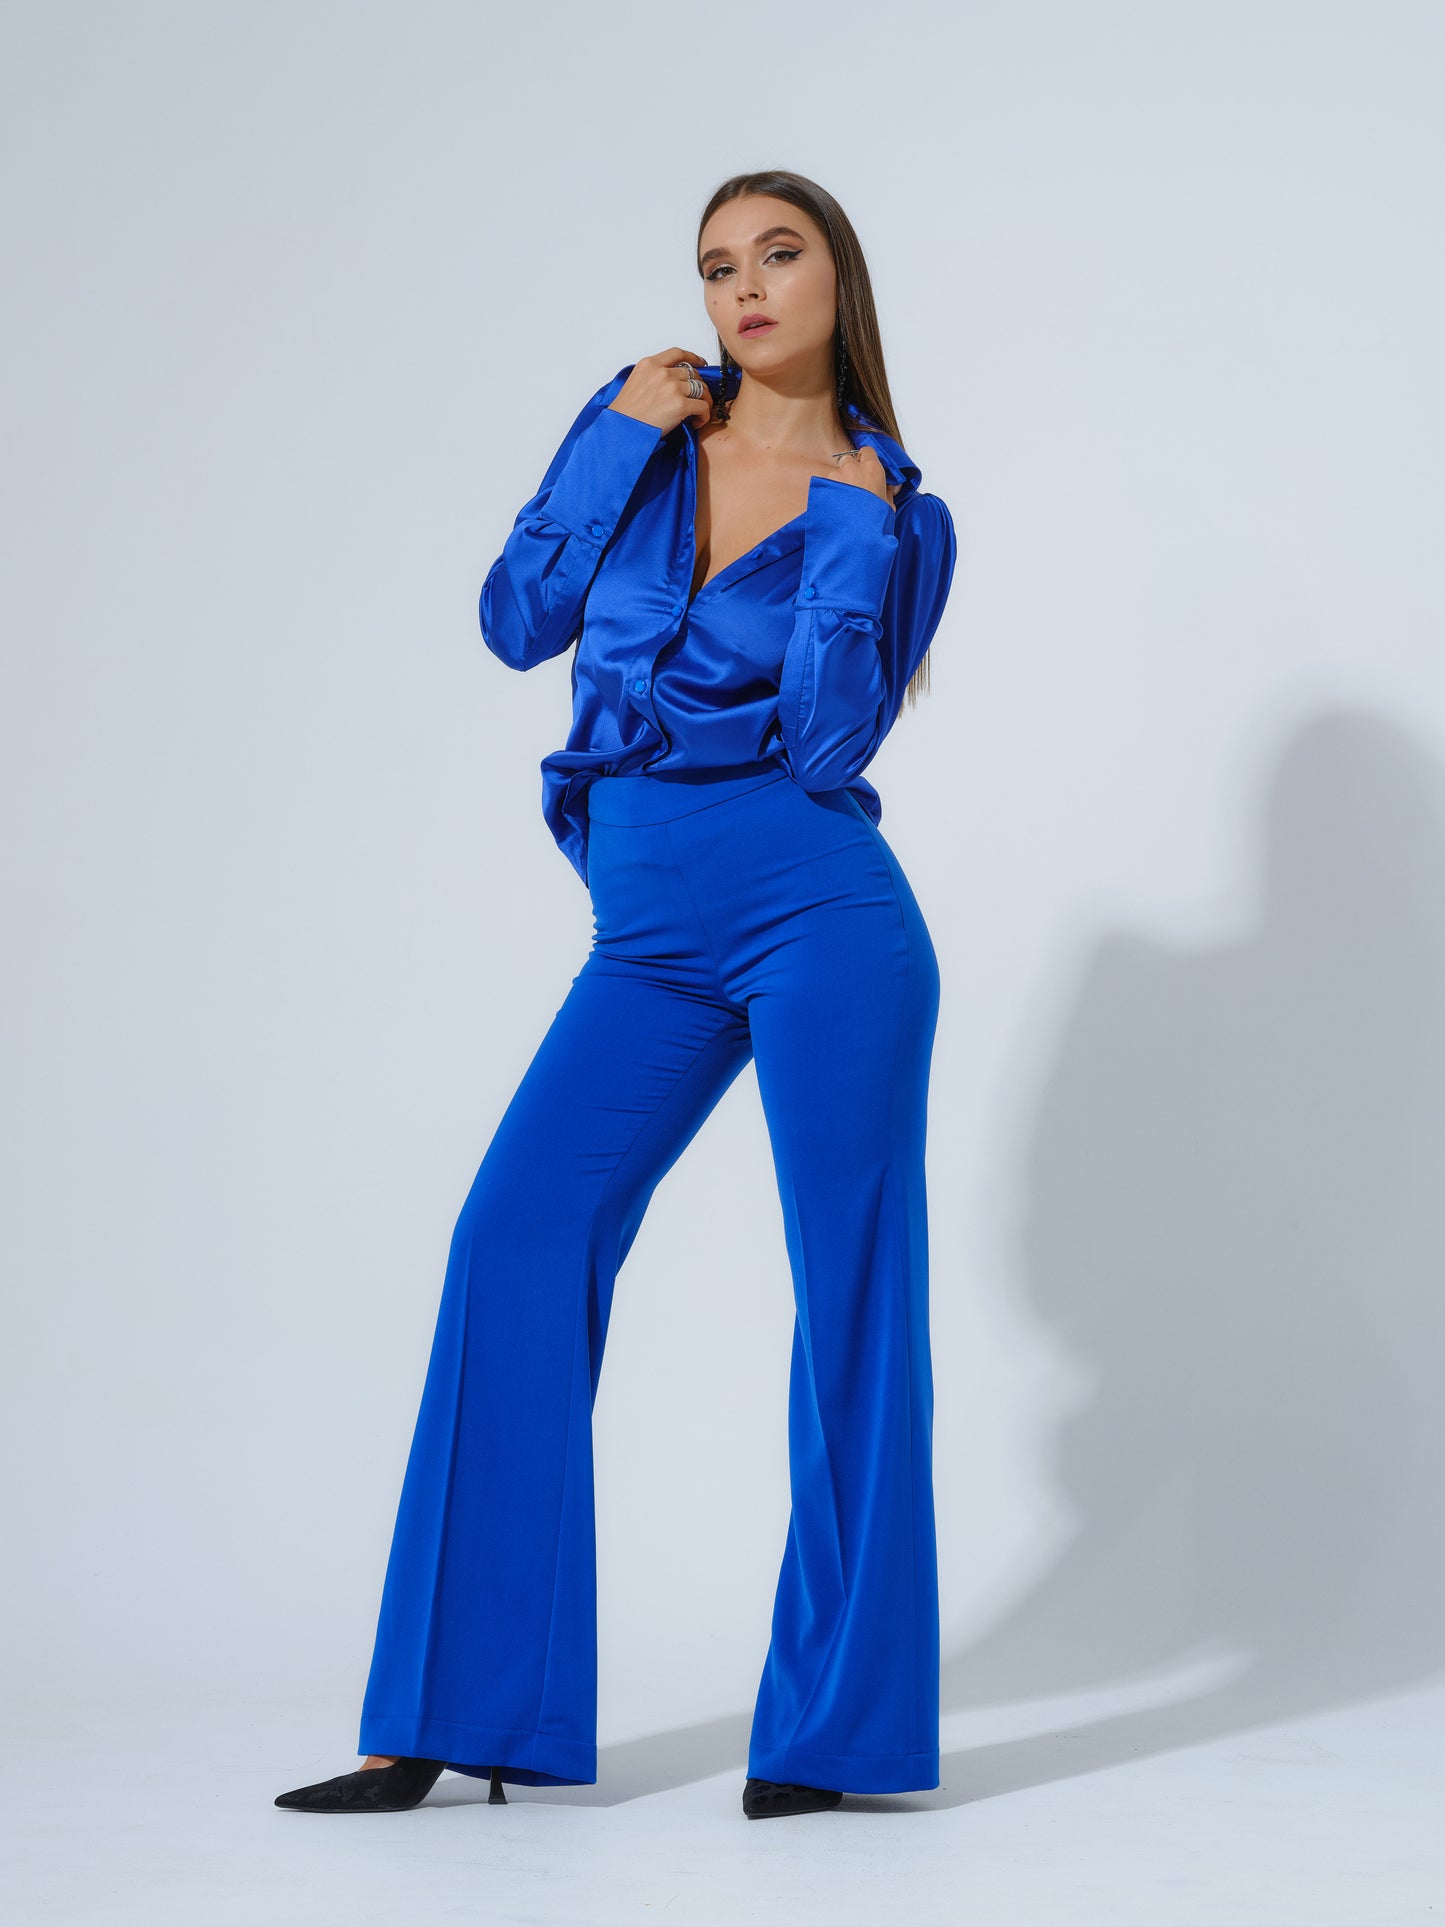 Royal Azure Fitted Satin Shirt by Tia Dorraine Women's Luxury Fashion Designer Clothing Brand